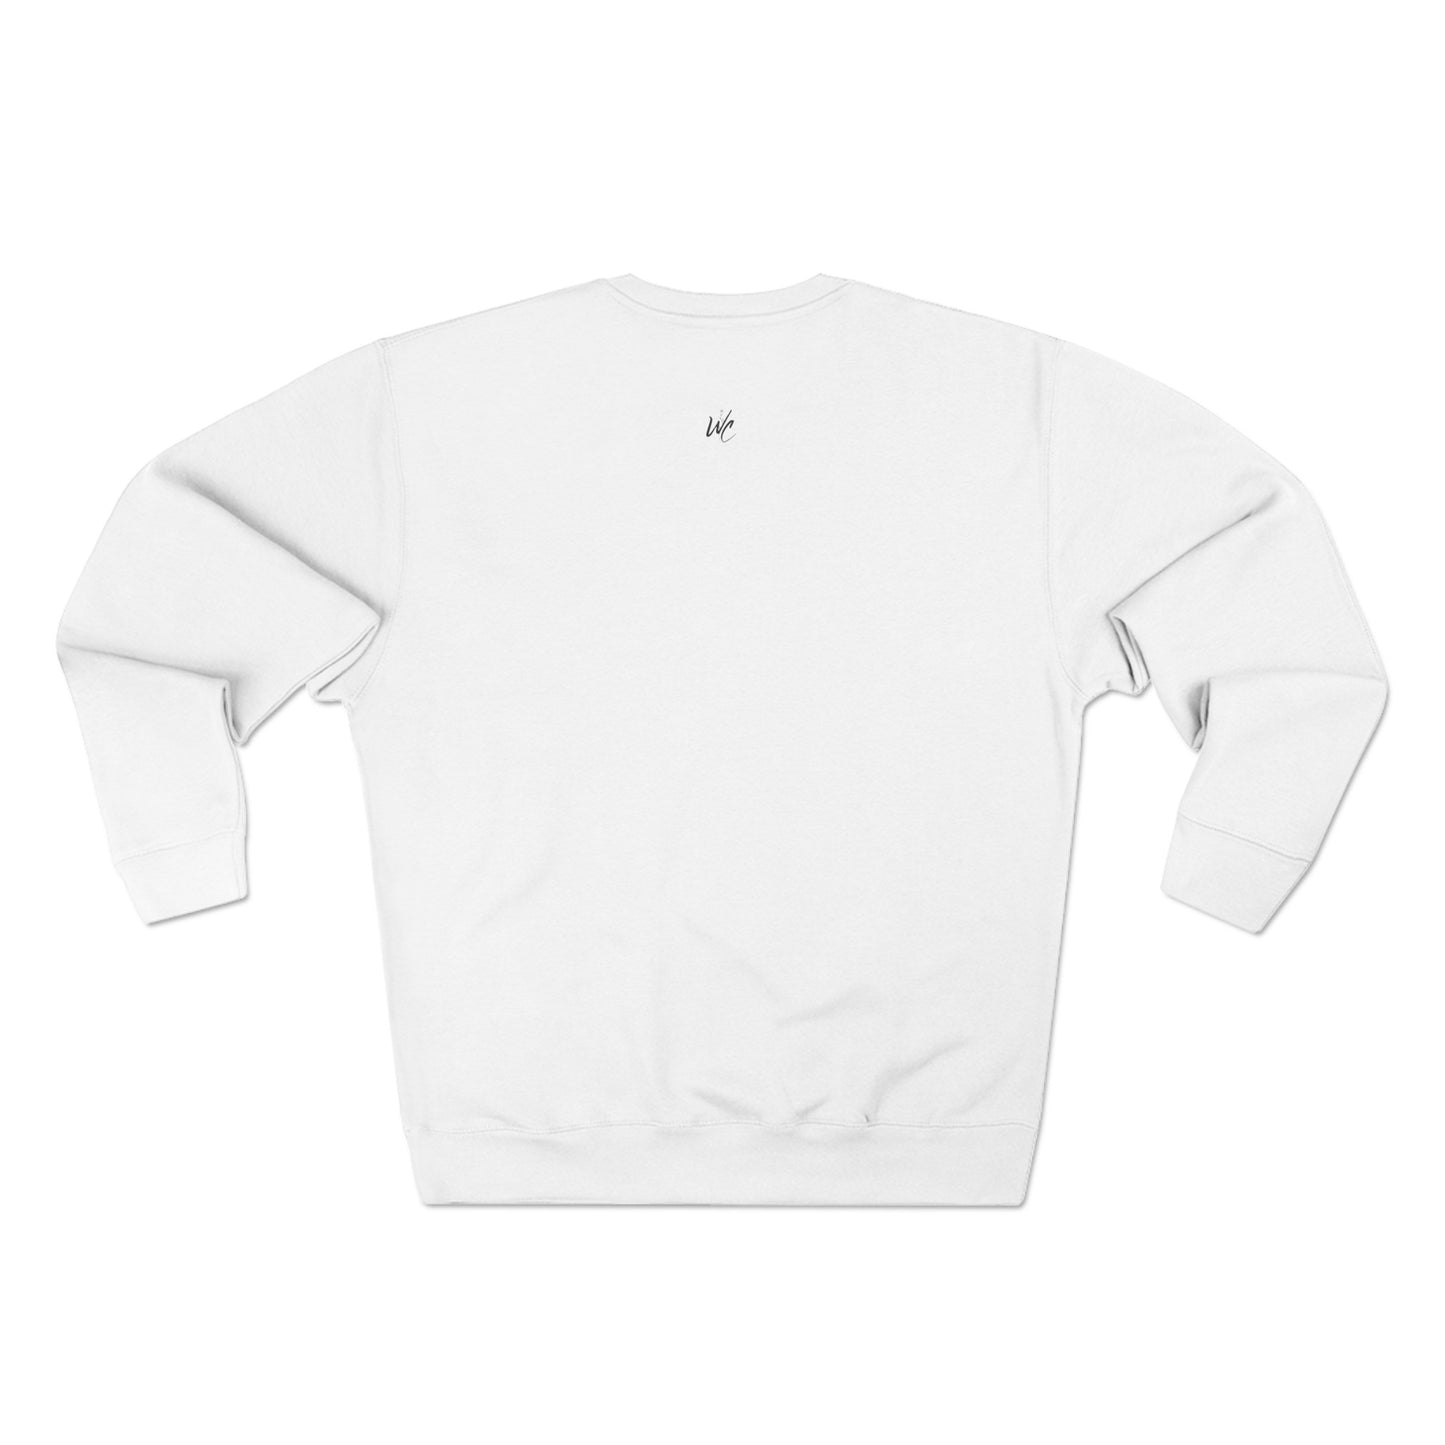 The Chosen Inspired - Made to Love Unisex Crewneck Sweatshirt | Heather Gray and White |